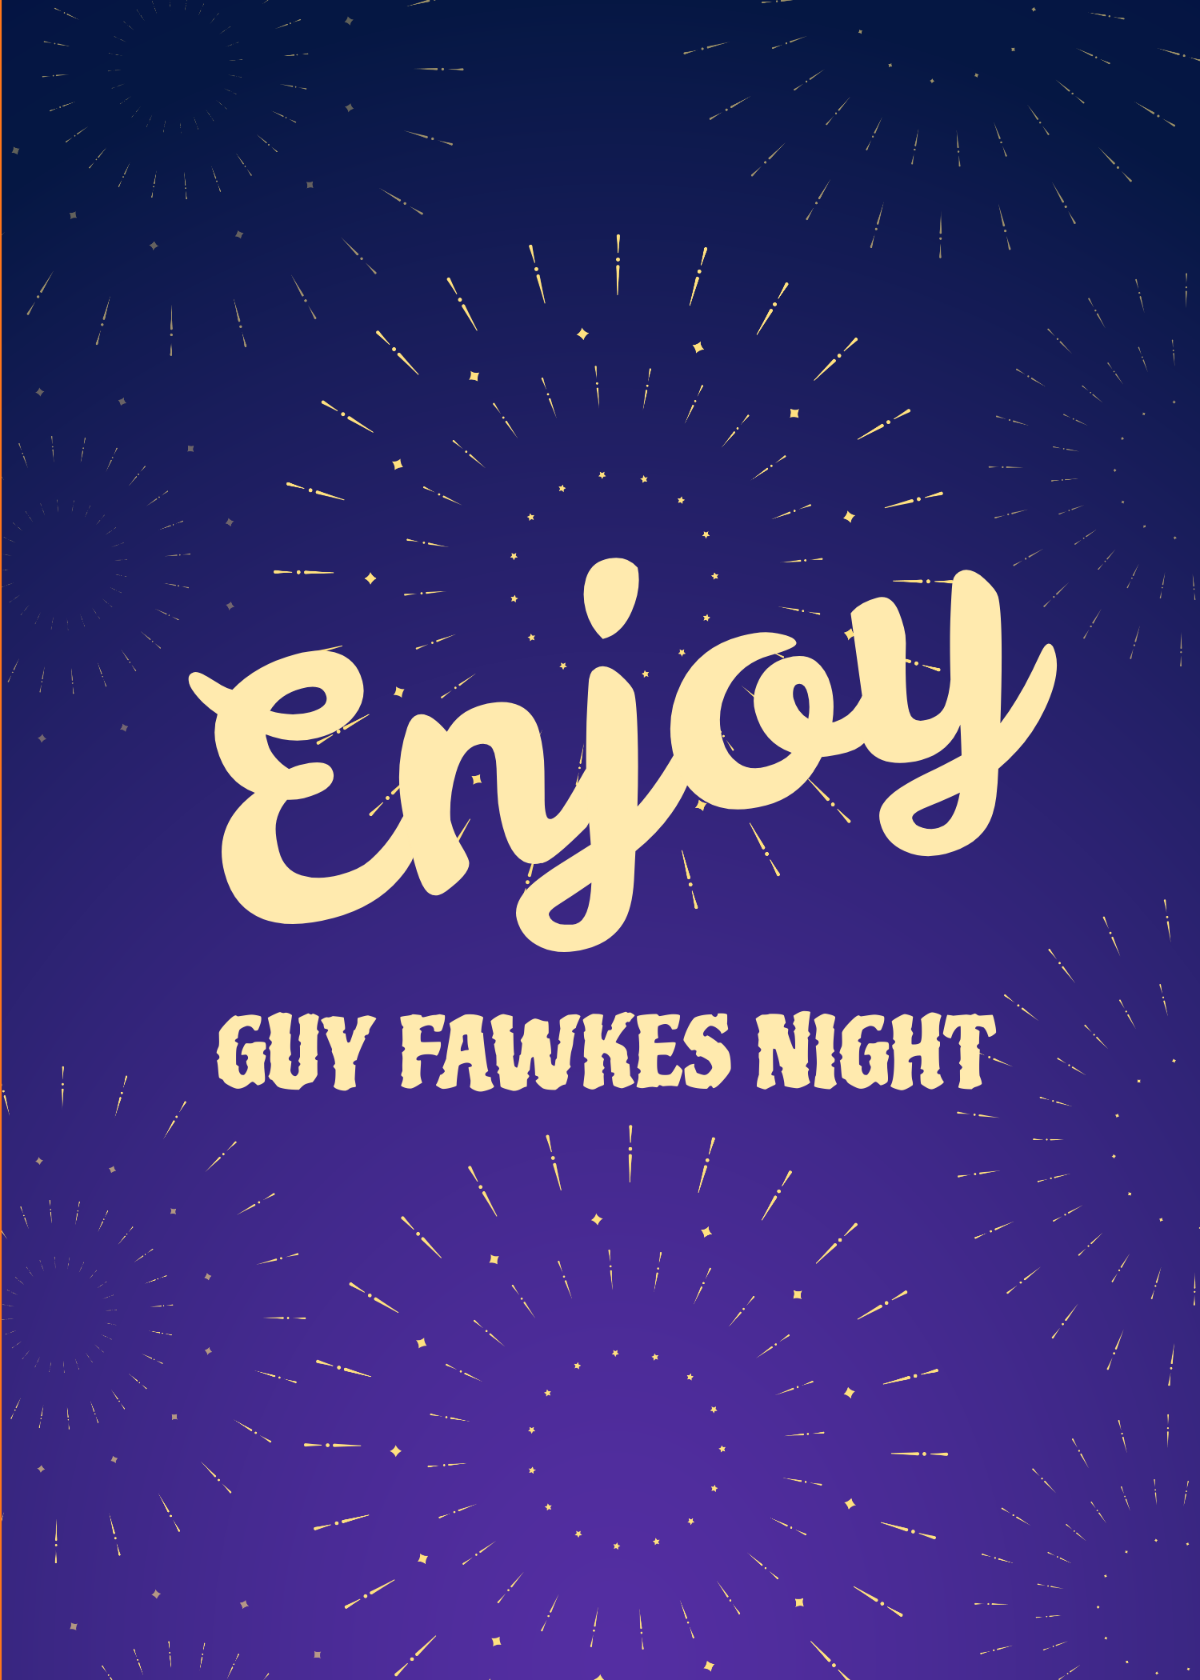 Guy Fawkes Night Greeting Card